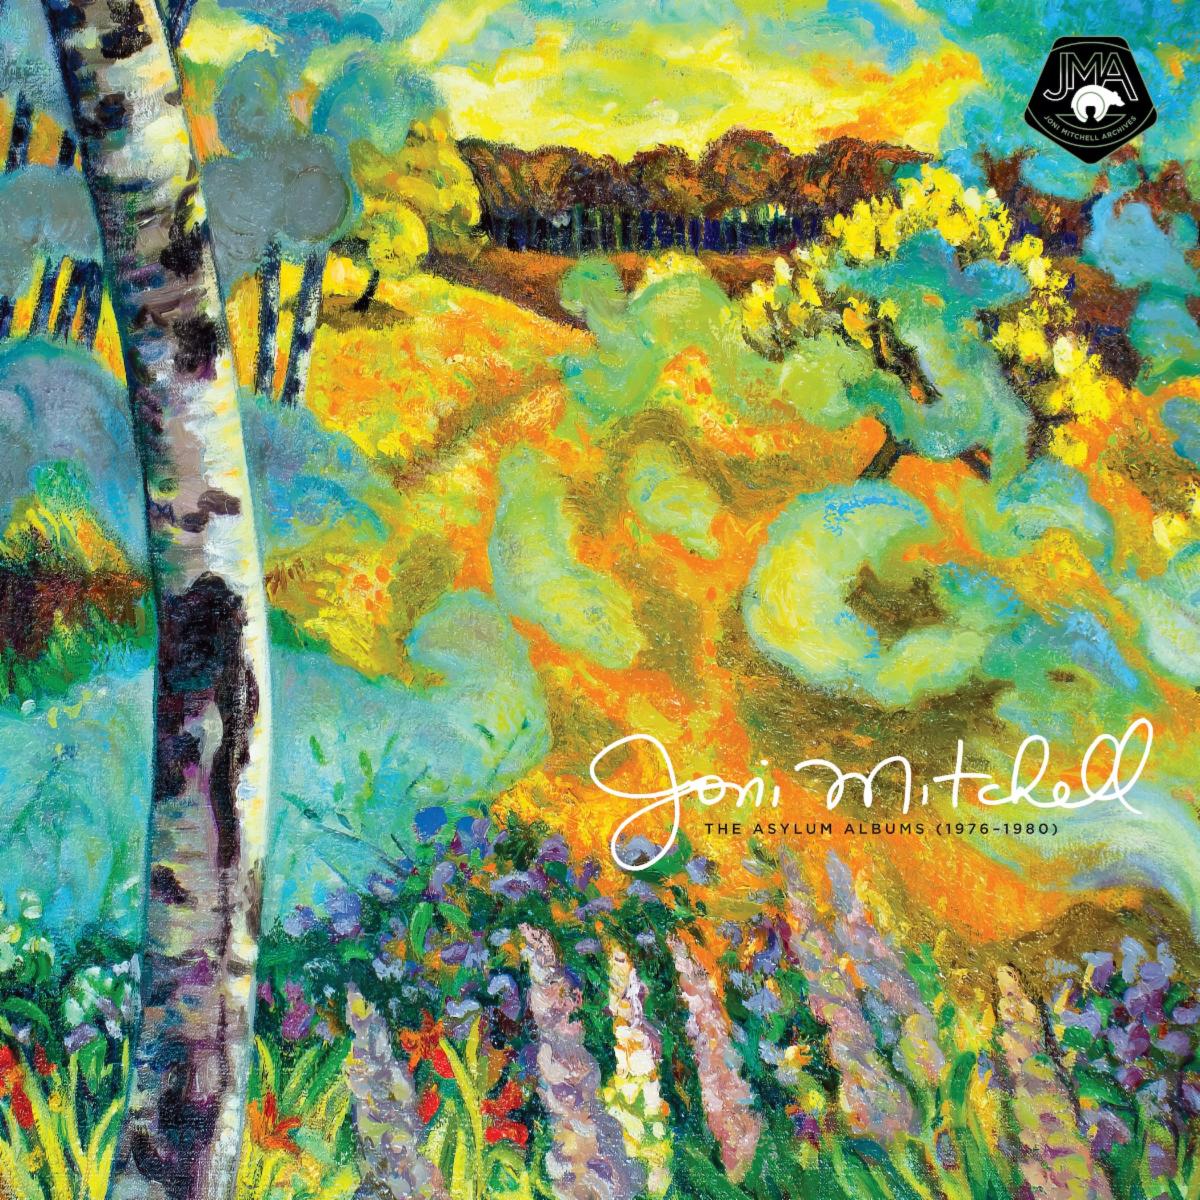 Joni Mitchell "The Asylum Albums (1978-1980)"